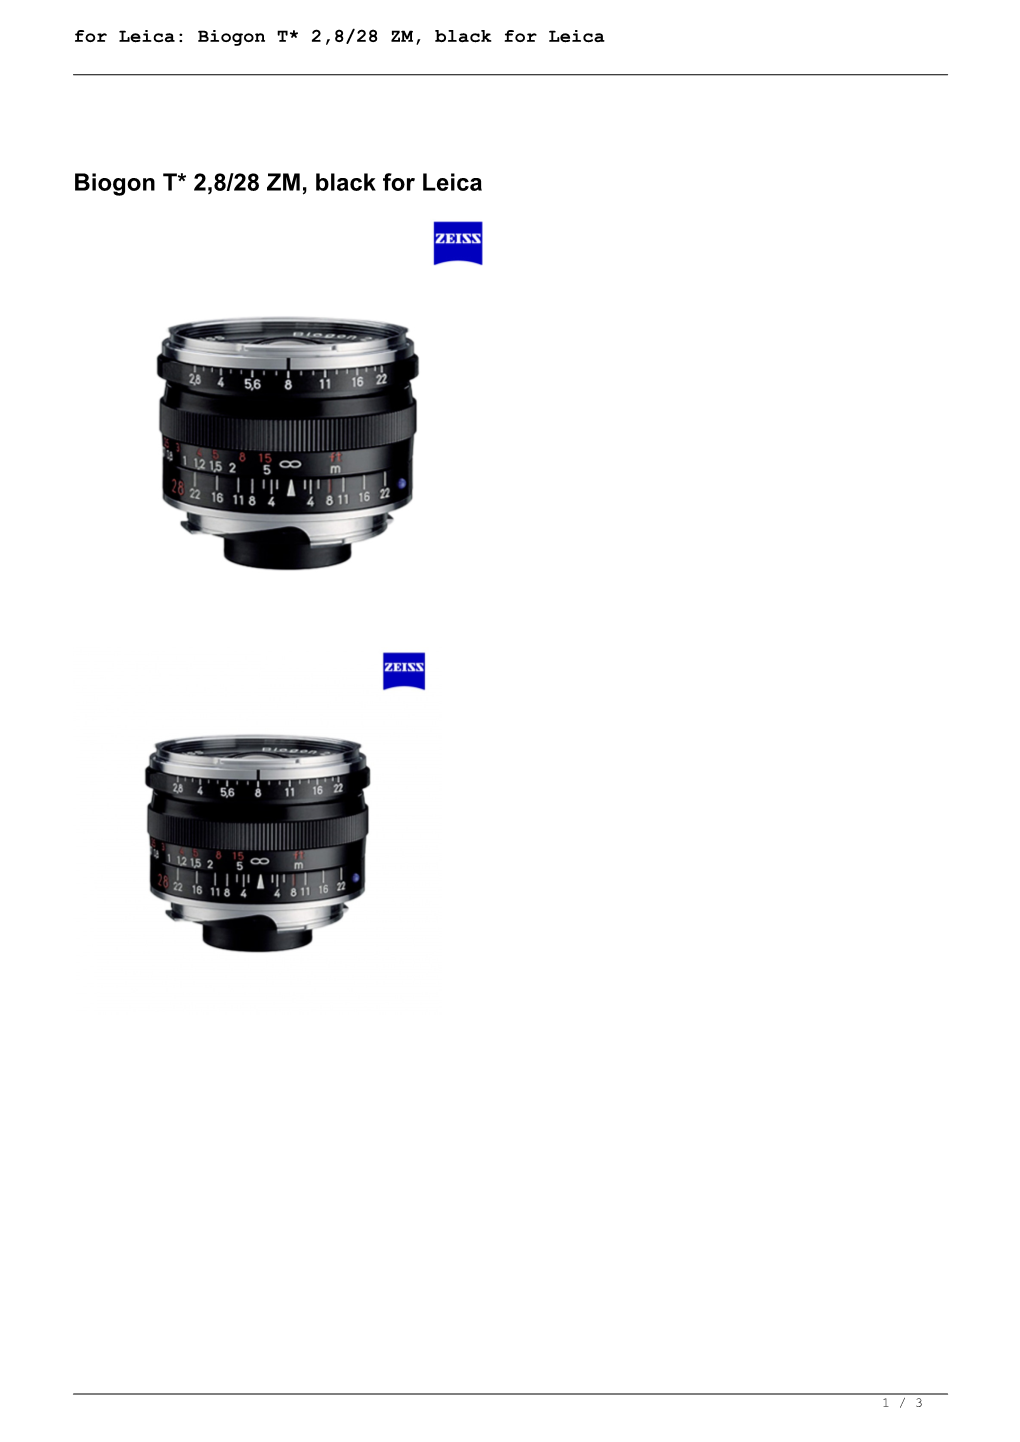 For Leica: Biogon T* 2,8/28 ZM, Black for Leica